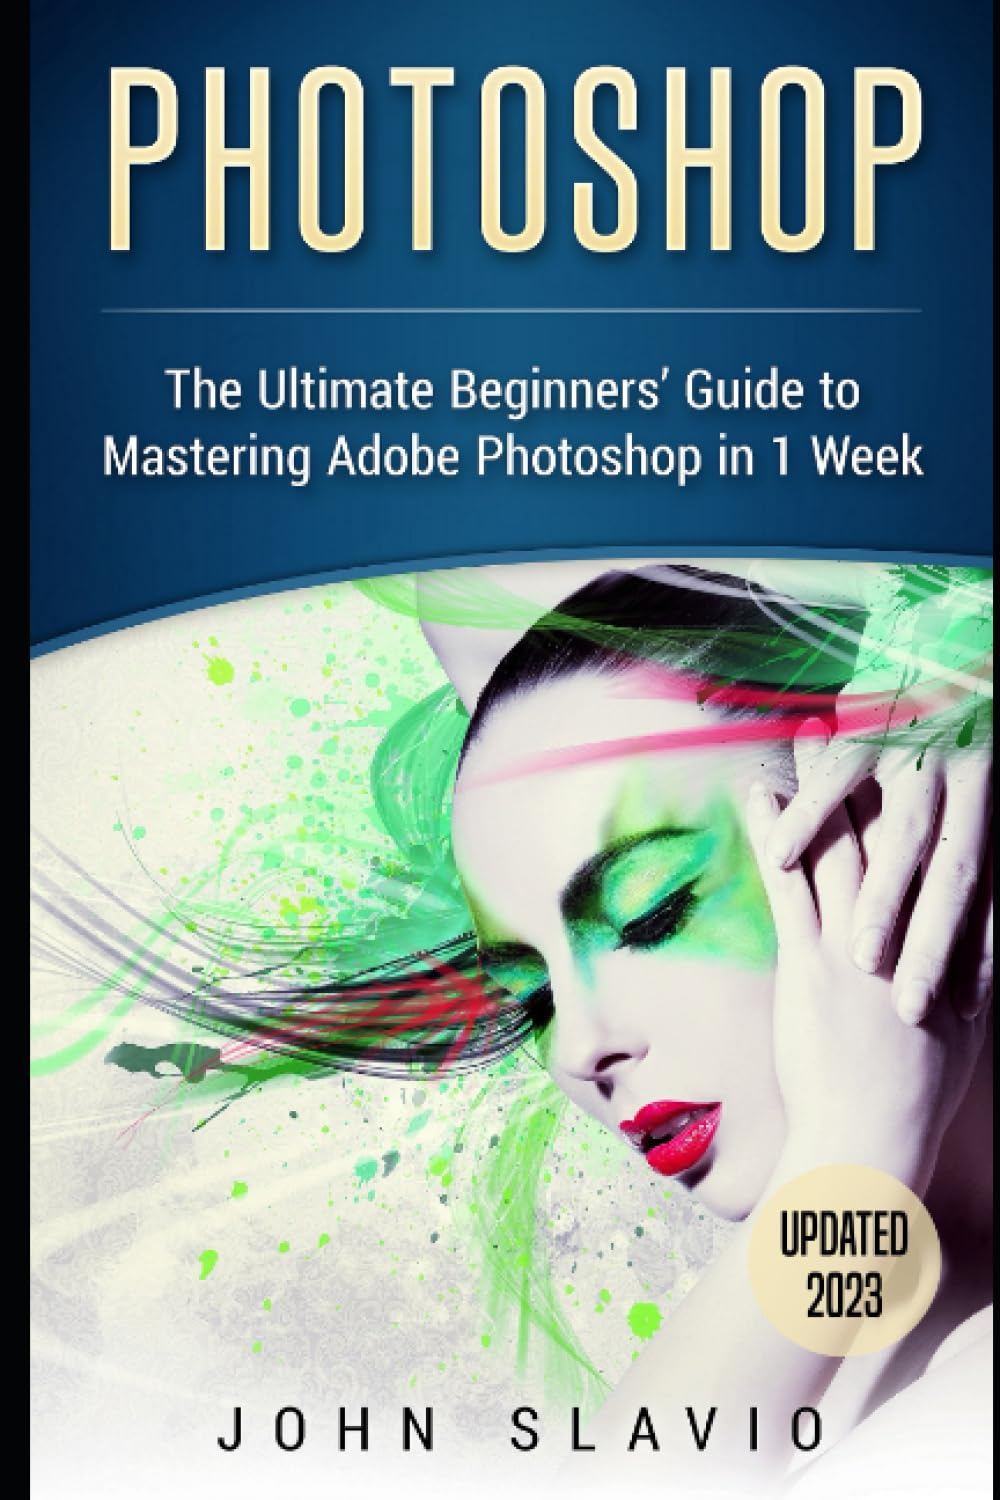 Mastering Adobe Photoshop in 1 Week by John Slavio